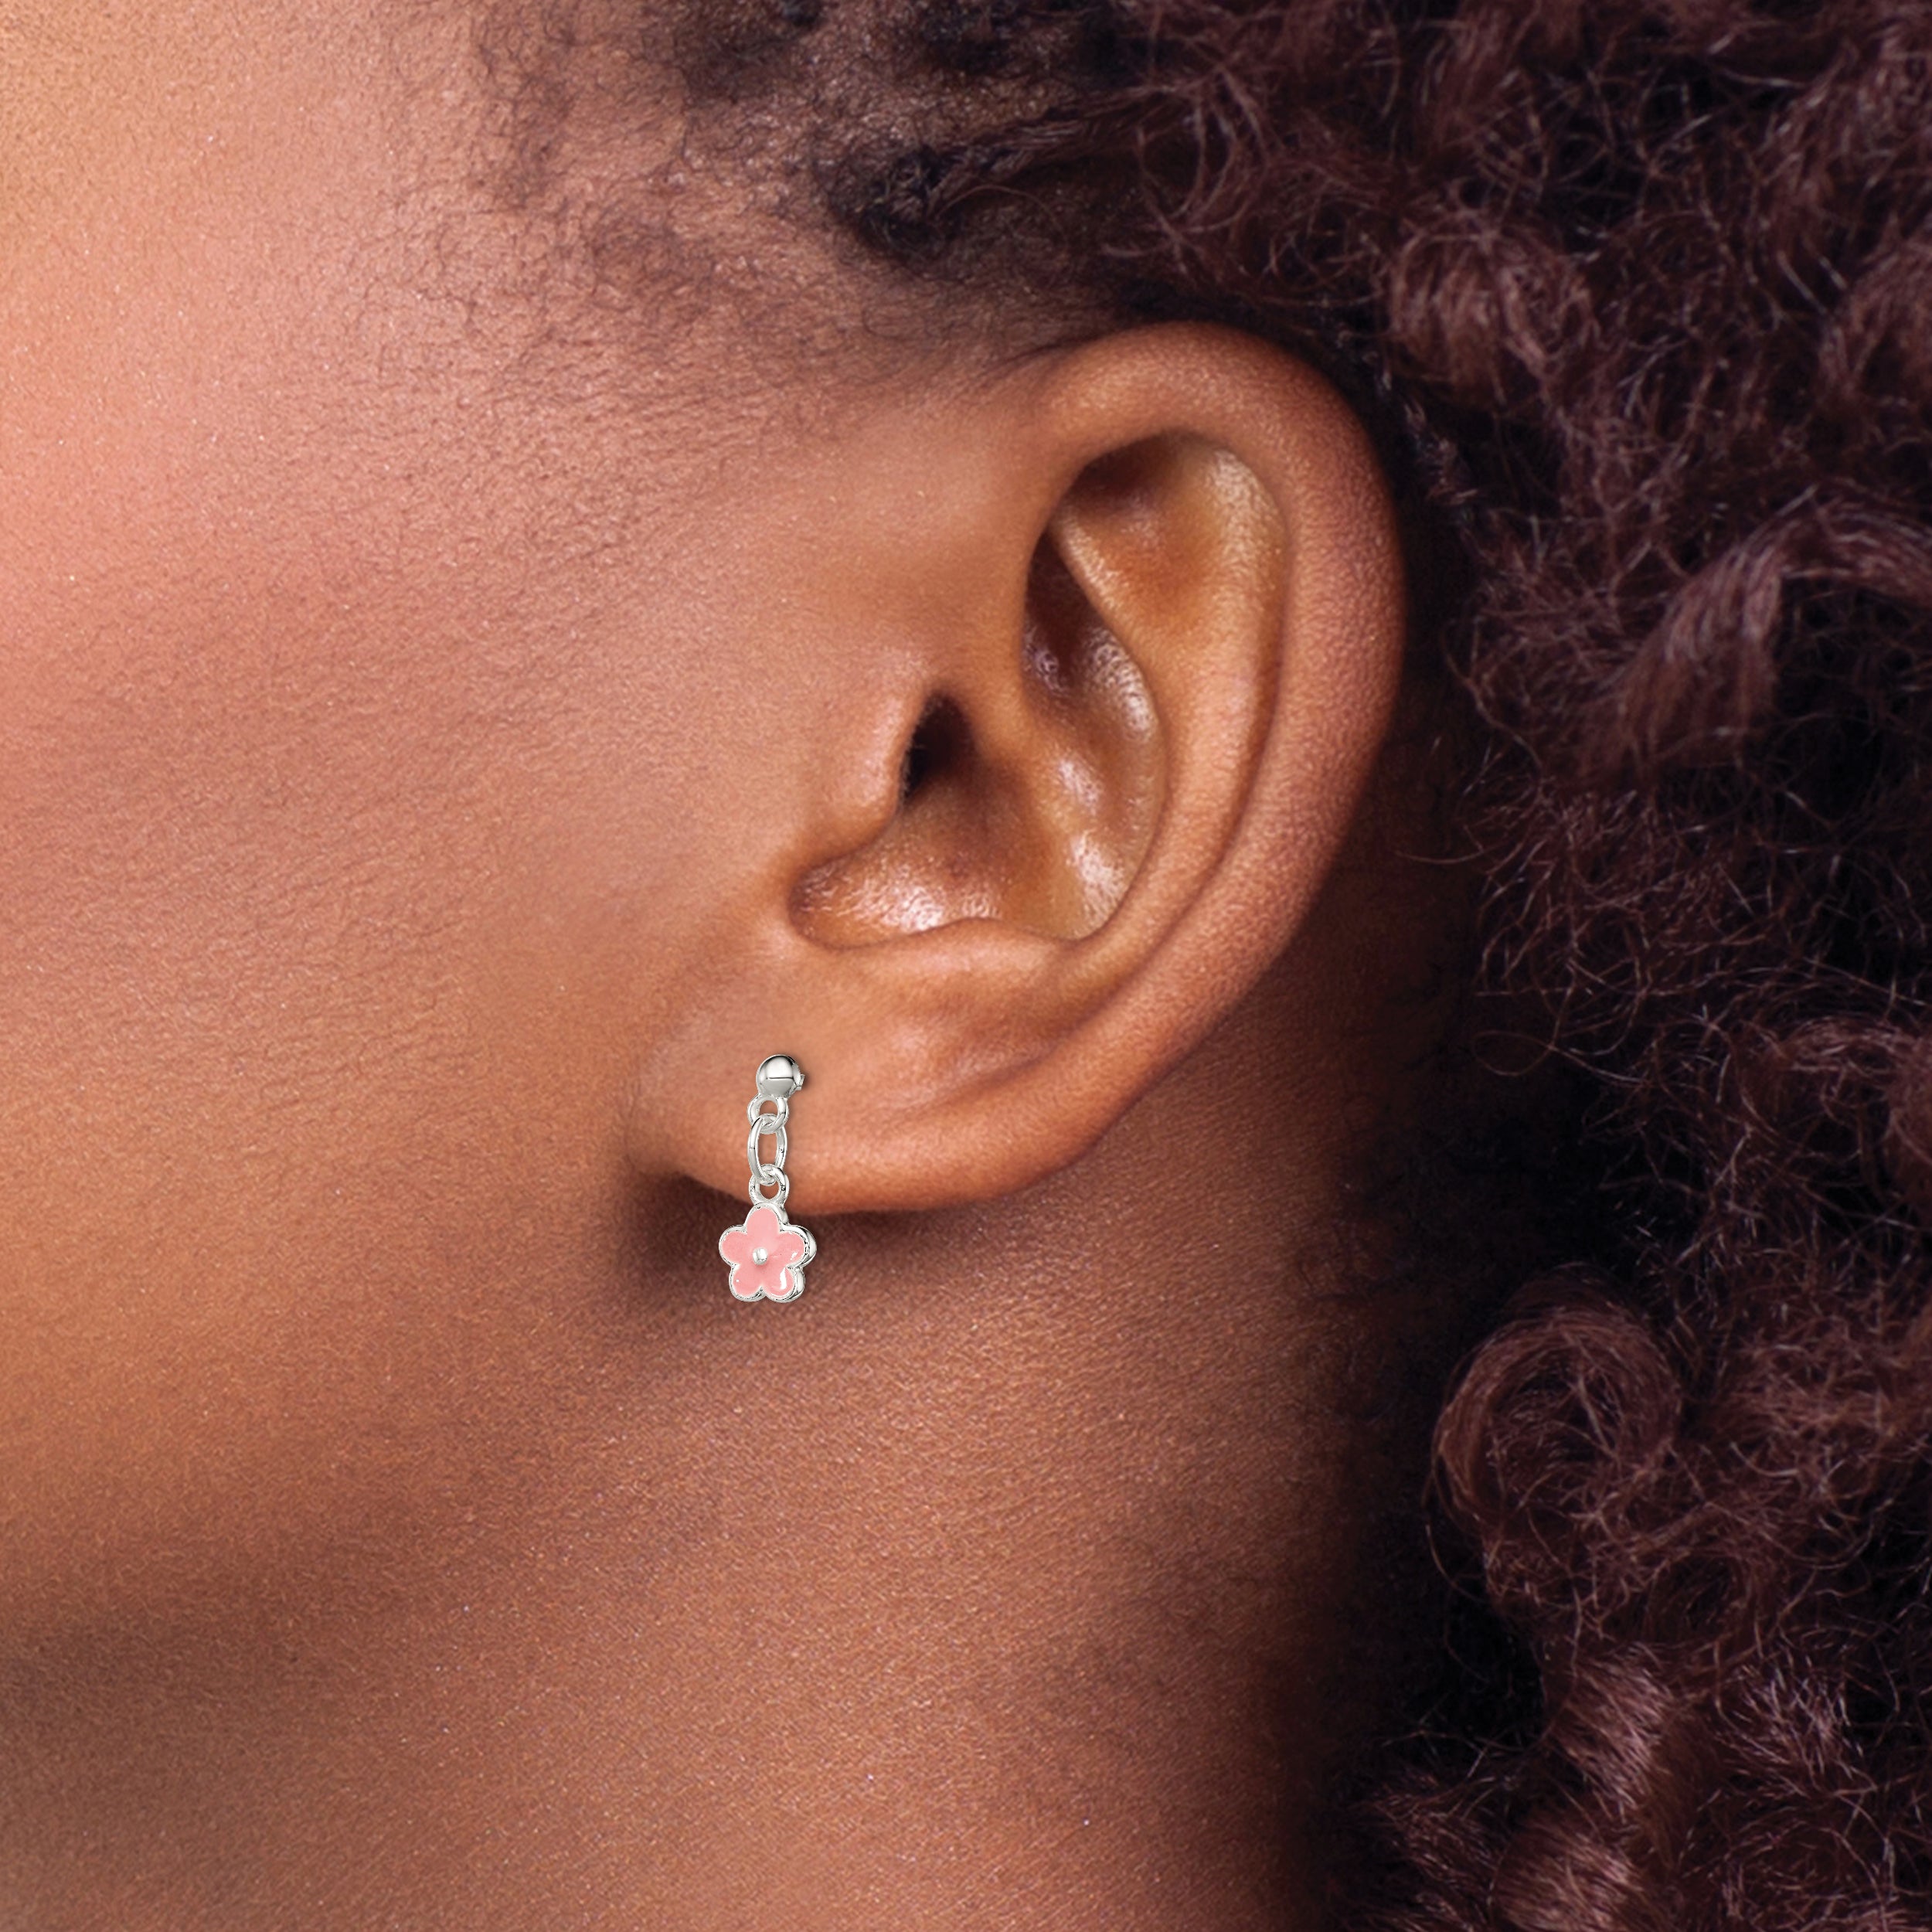 Sterling Silver Polished Pink Enameled Flower Children's Post Dangle Earrings